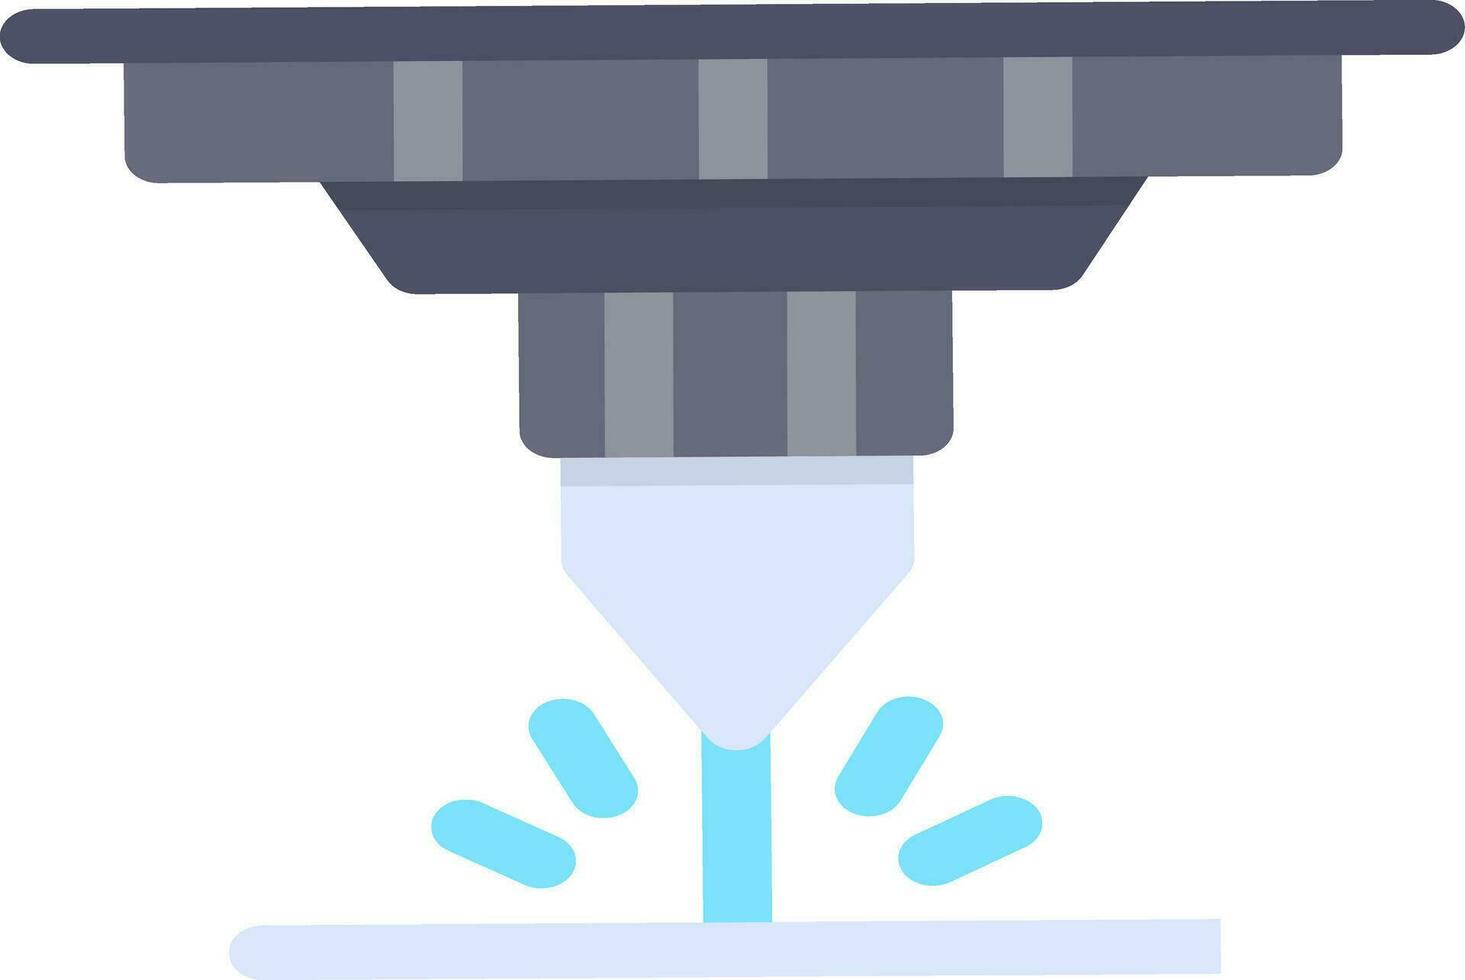 Water Cutting Machine Creative Icon Design vector